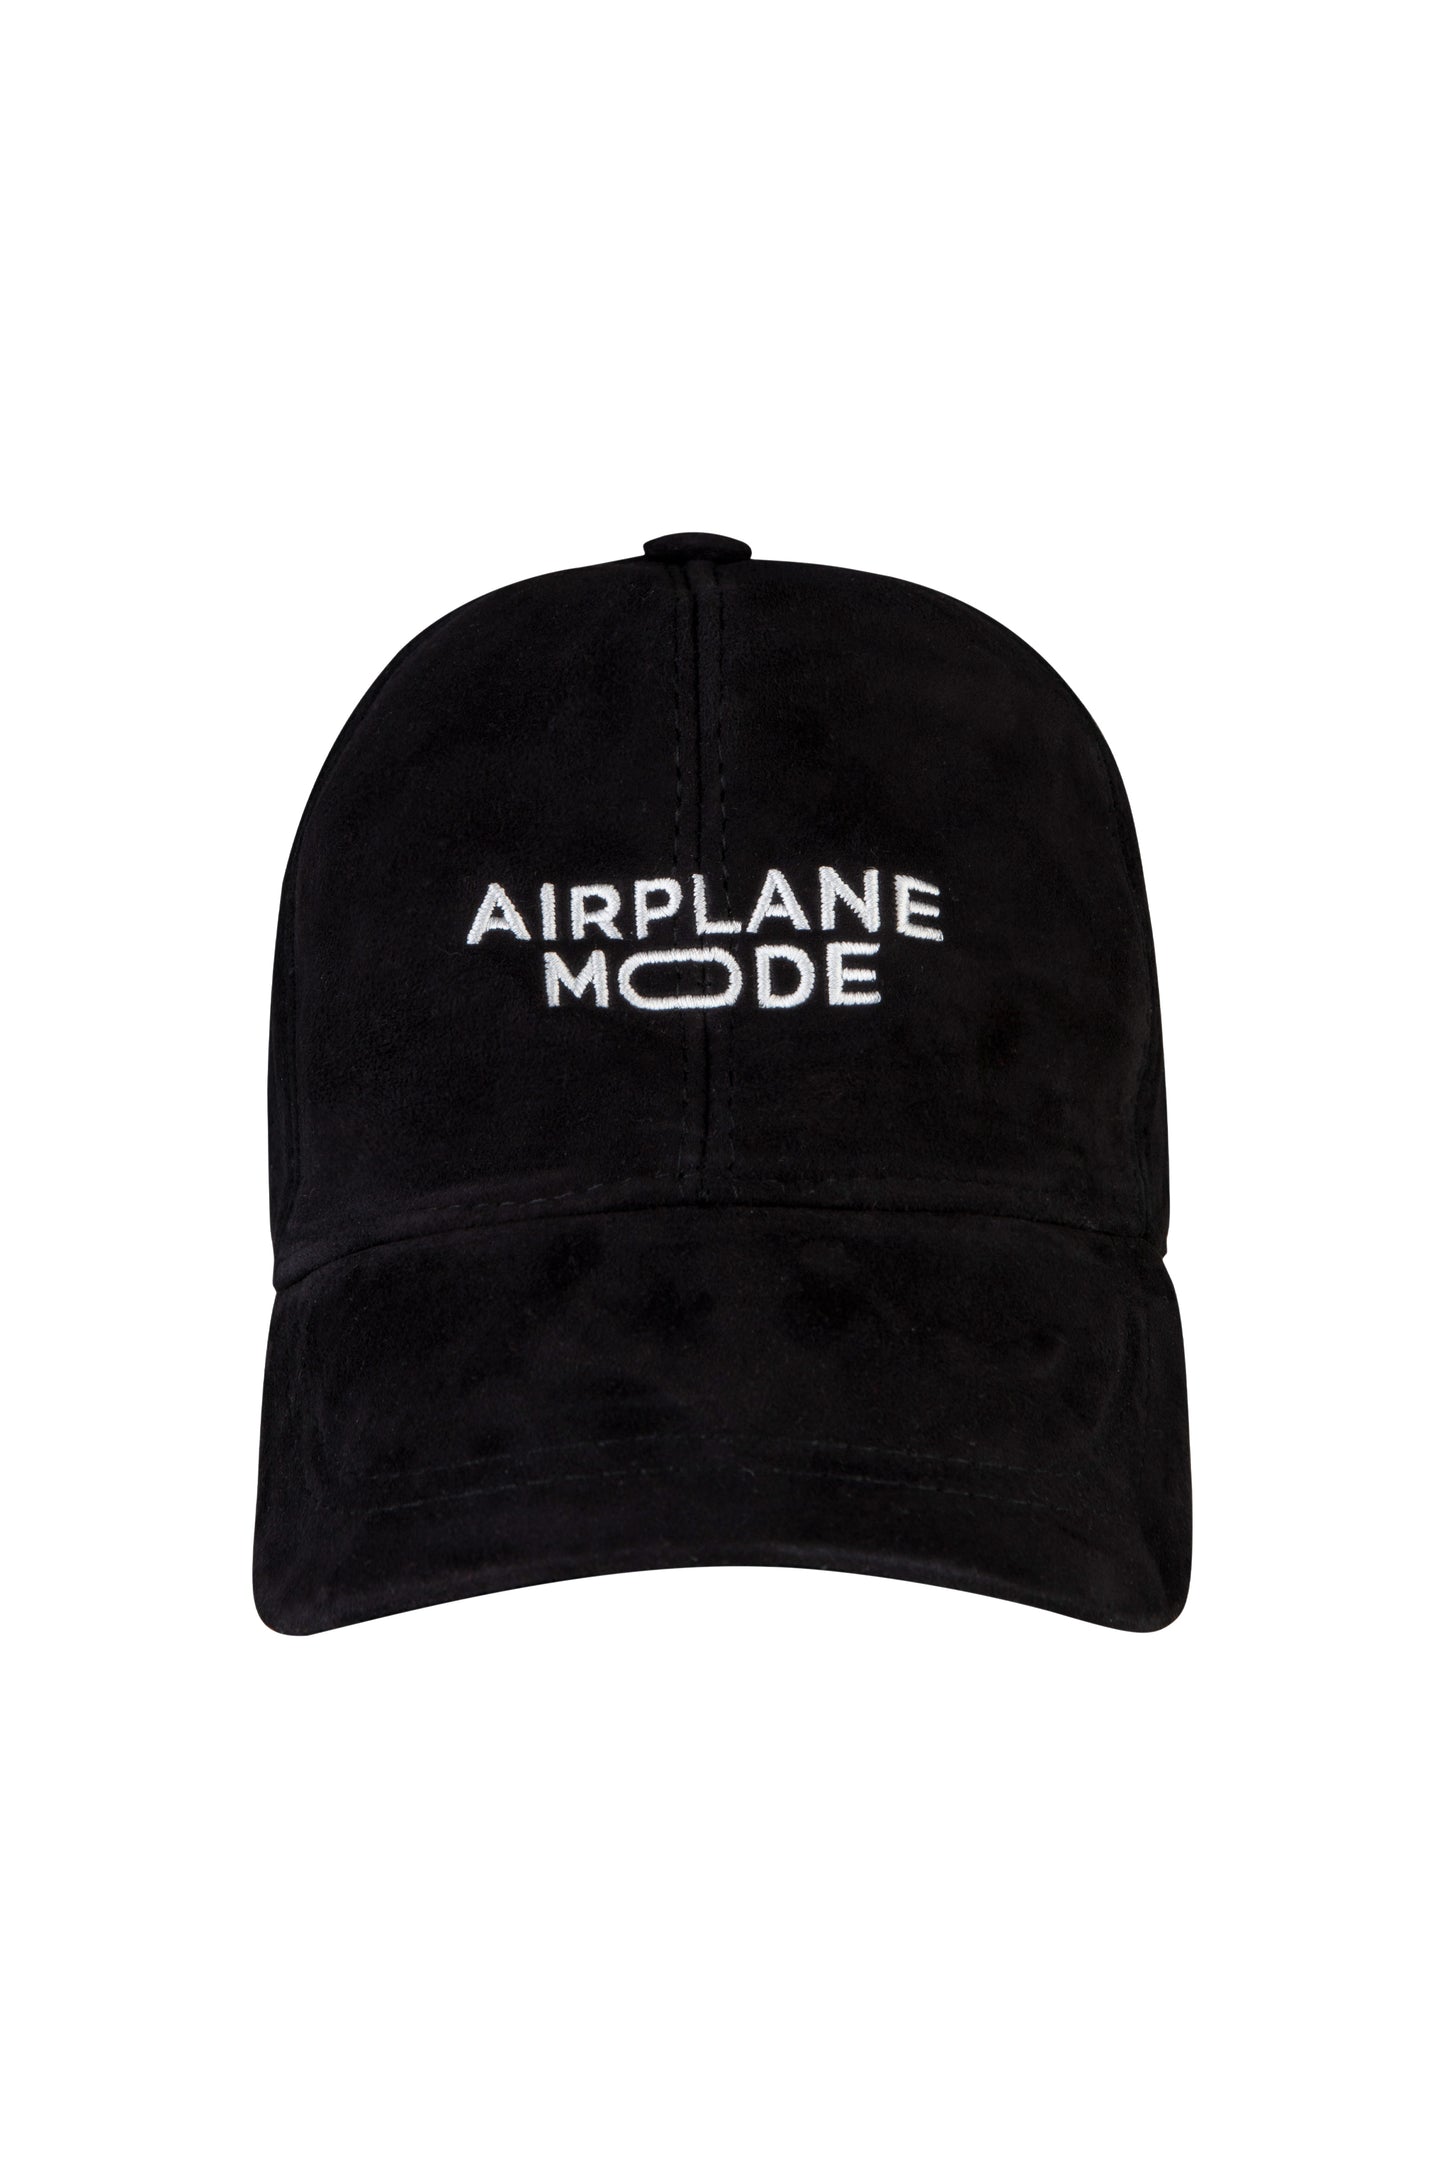 AIRPLANE MODE - Black